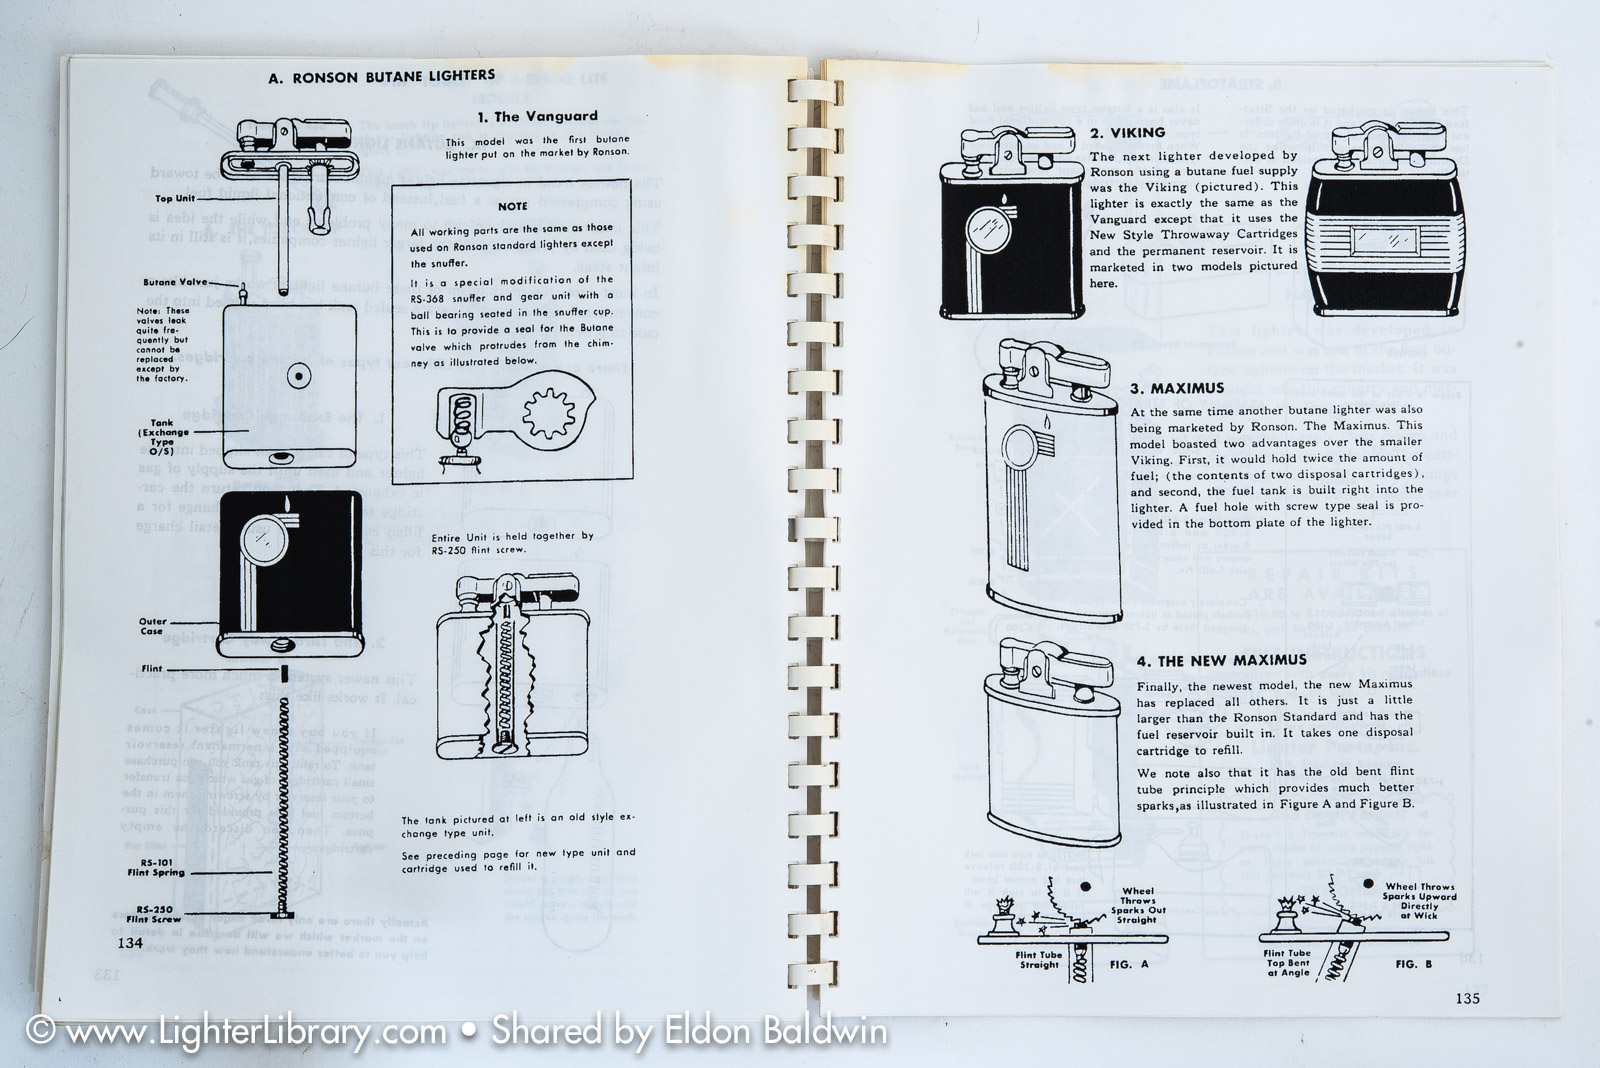 Bliv overrasket fysiker medarbejder Lighter Repair Manual - full document